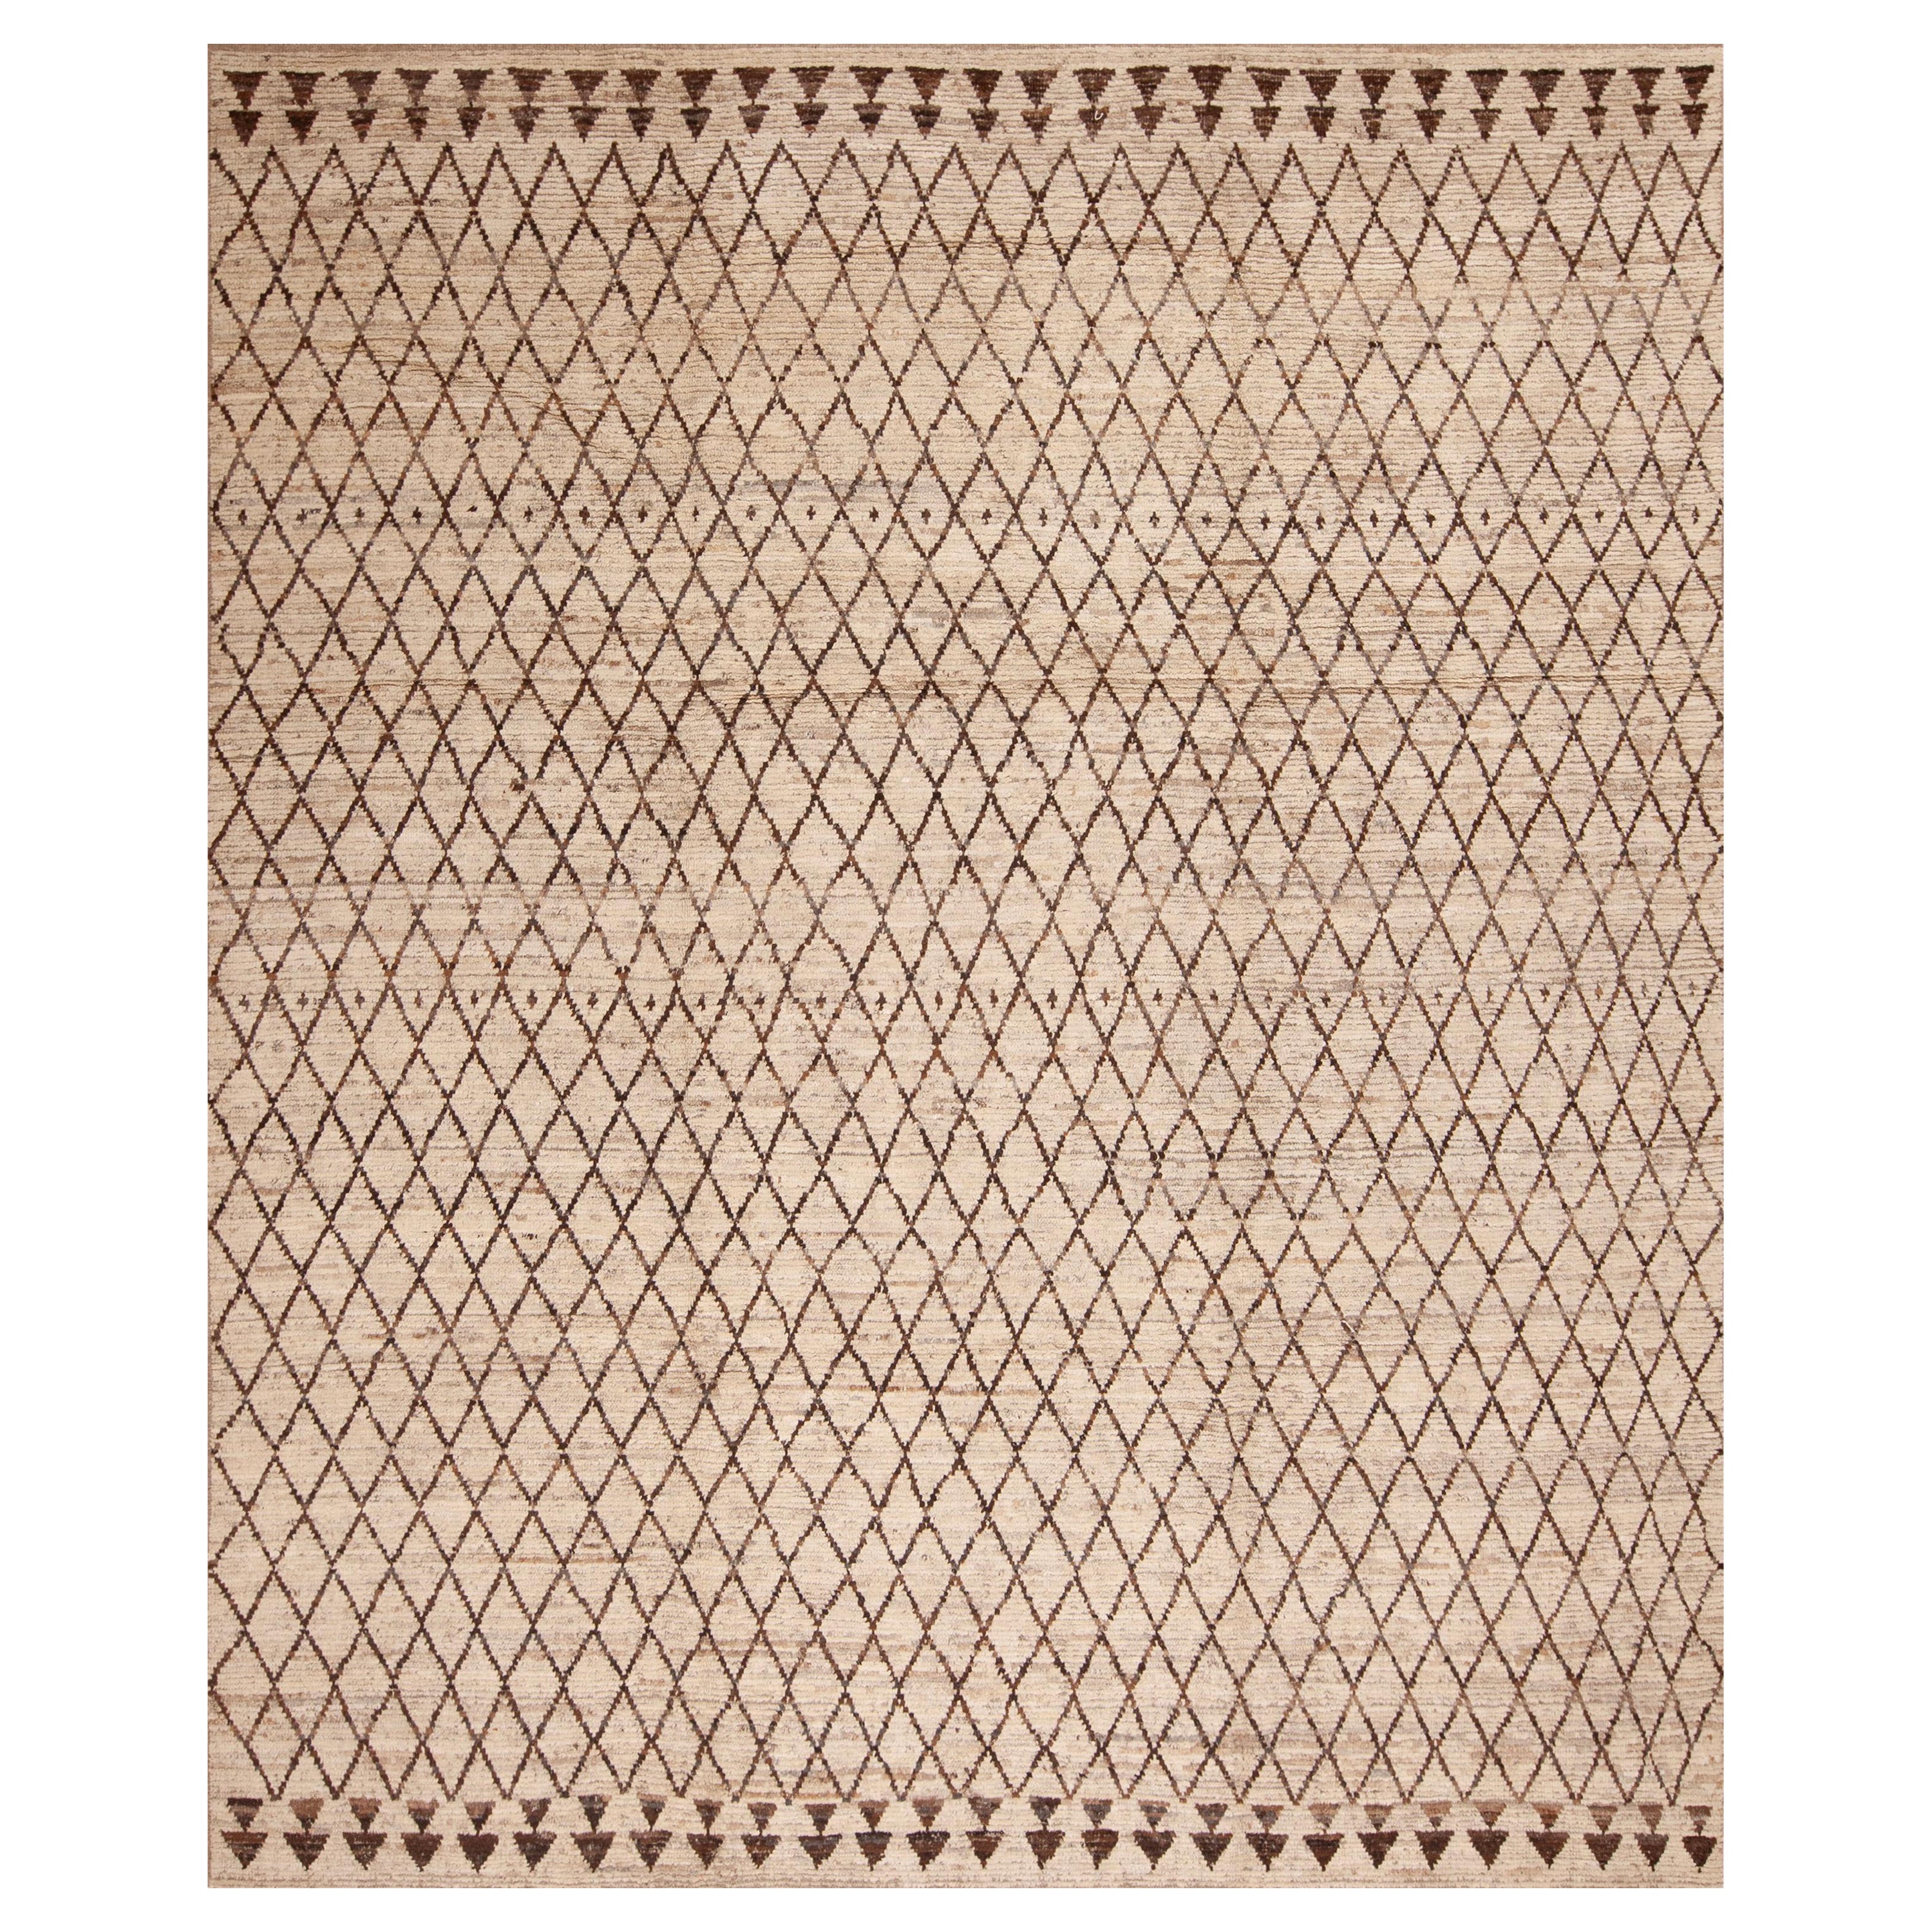 Collection Nazmiyal, motif grille en losanges, taille de pièce moderne 9'5" x 11'4"